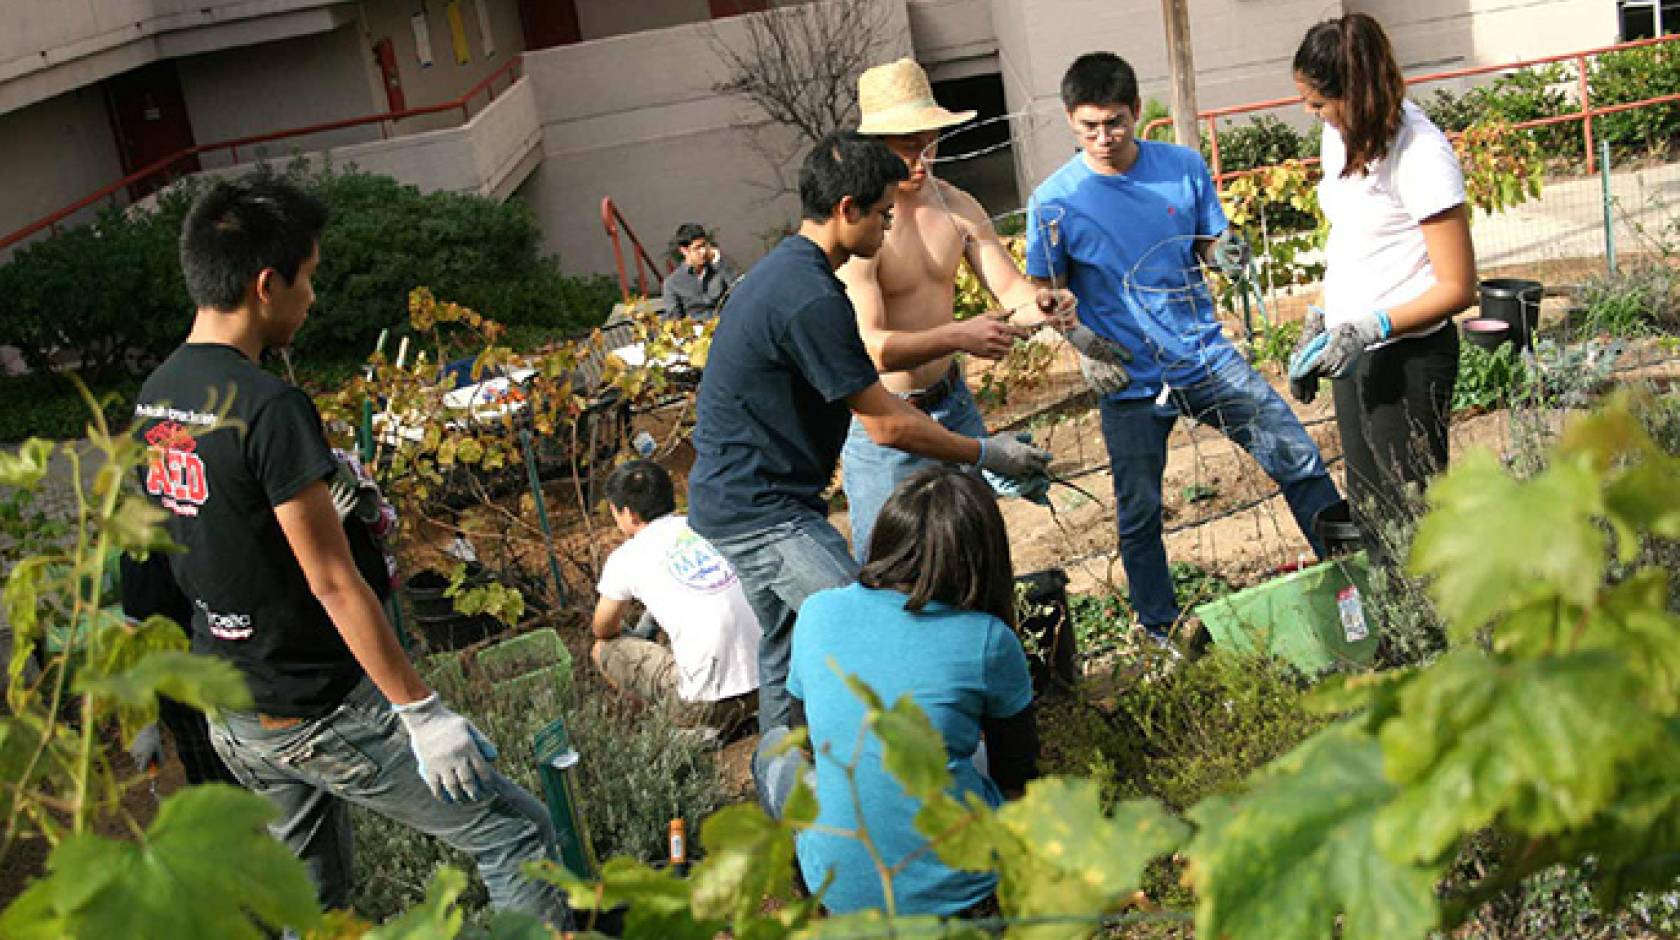 Students gardening